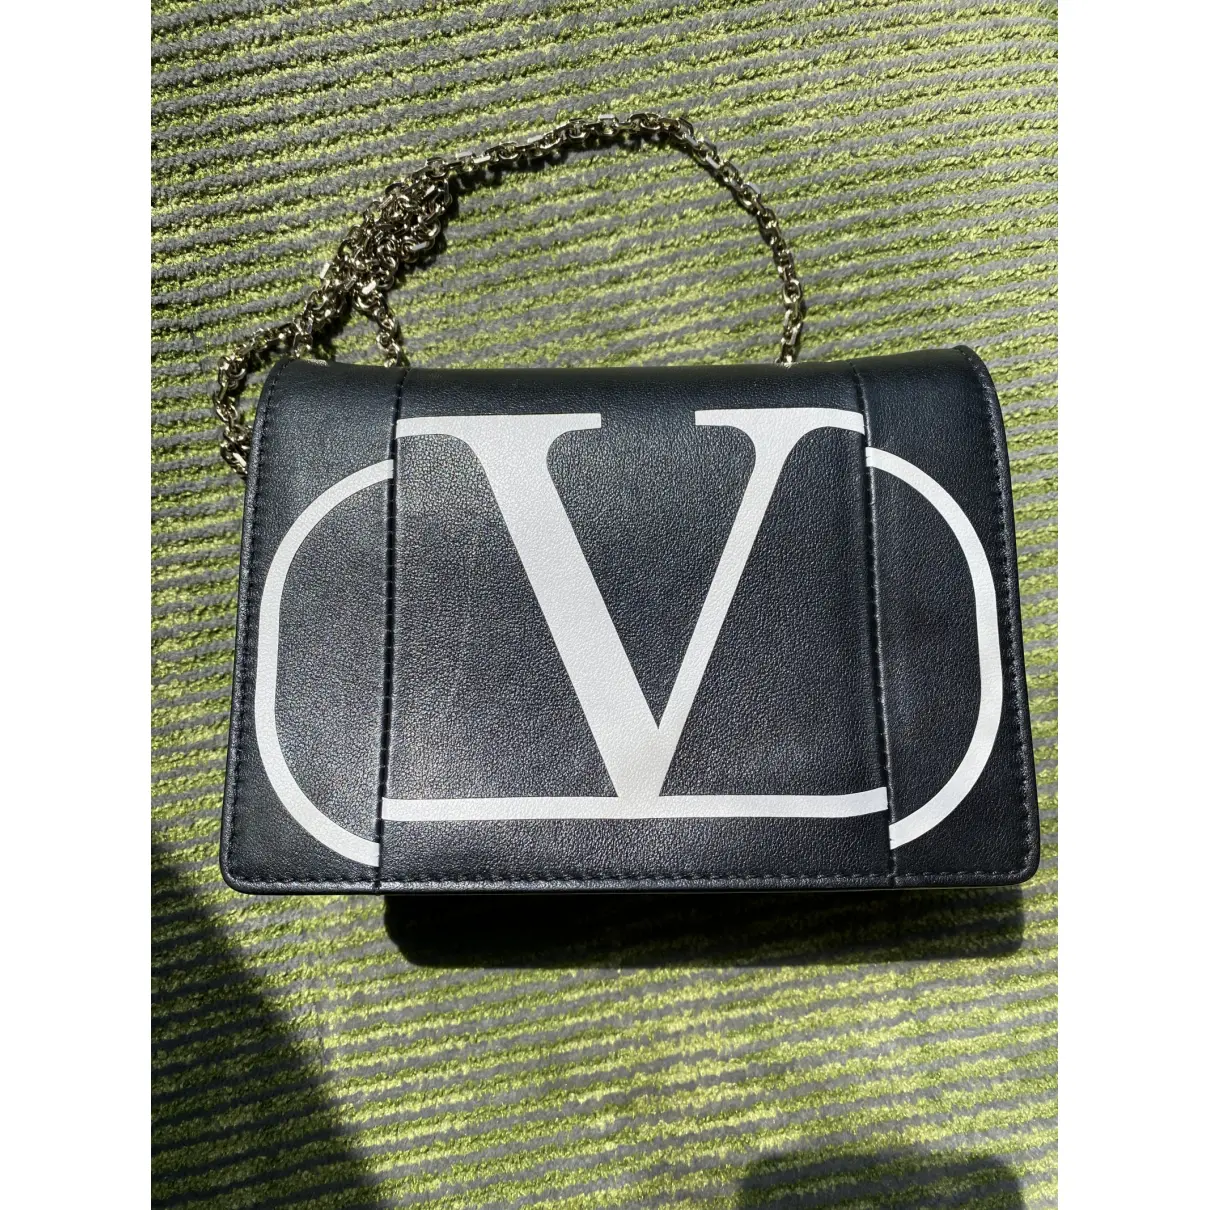 VLogo leather handbag Valentino Garavani